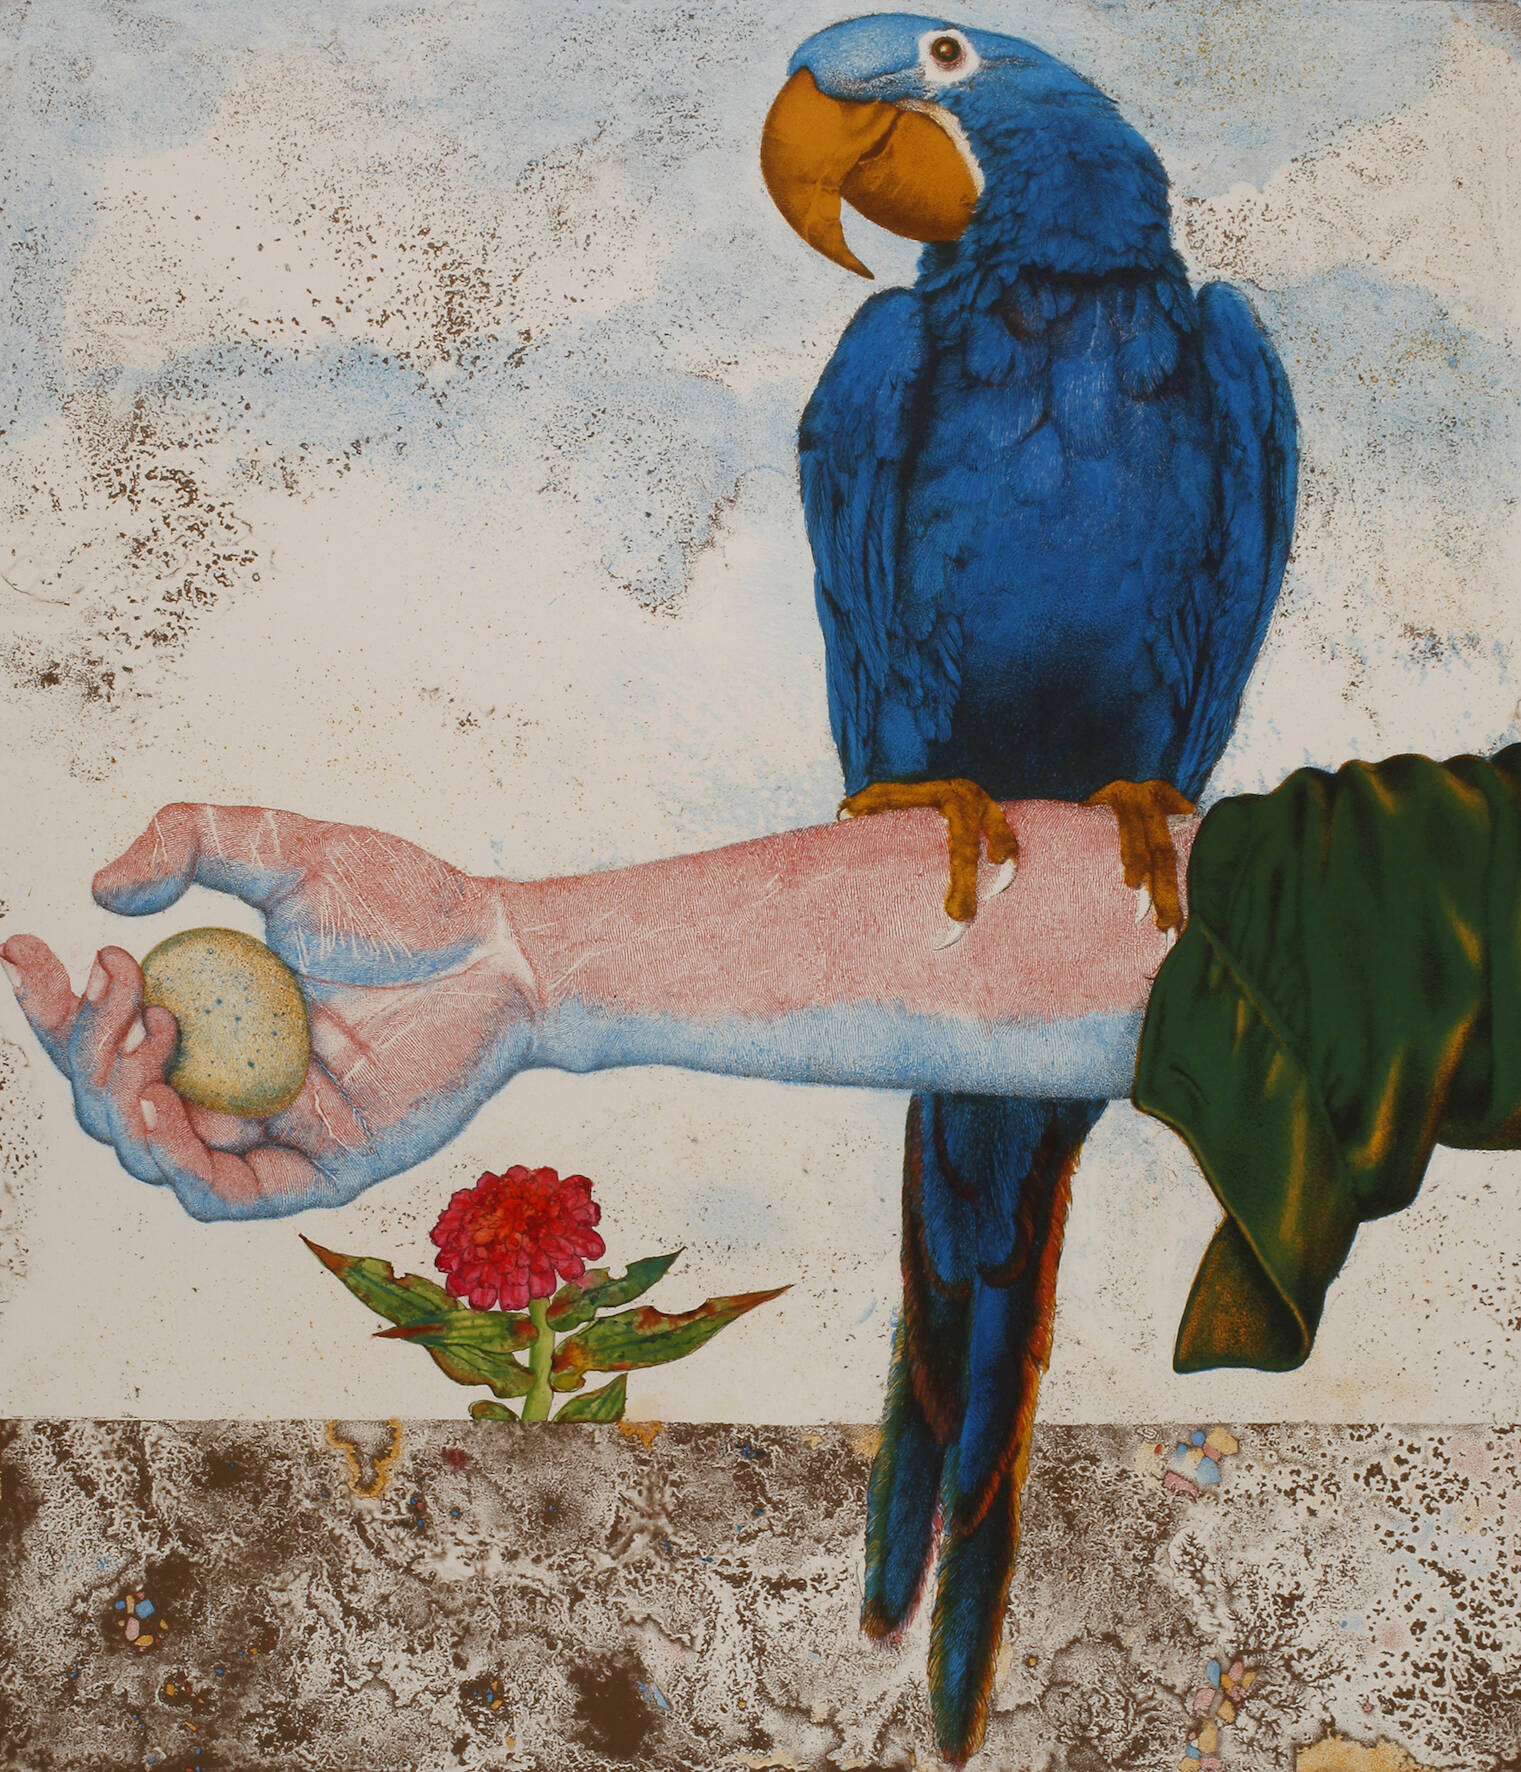 Michael Prechtl, "Papagei Arm & Ei"